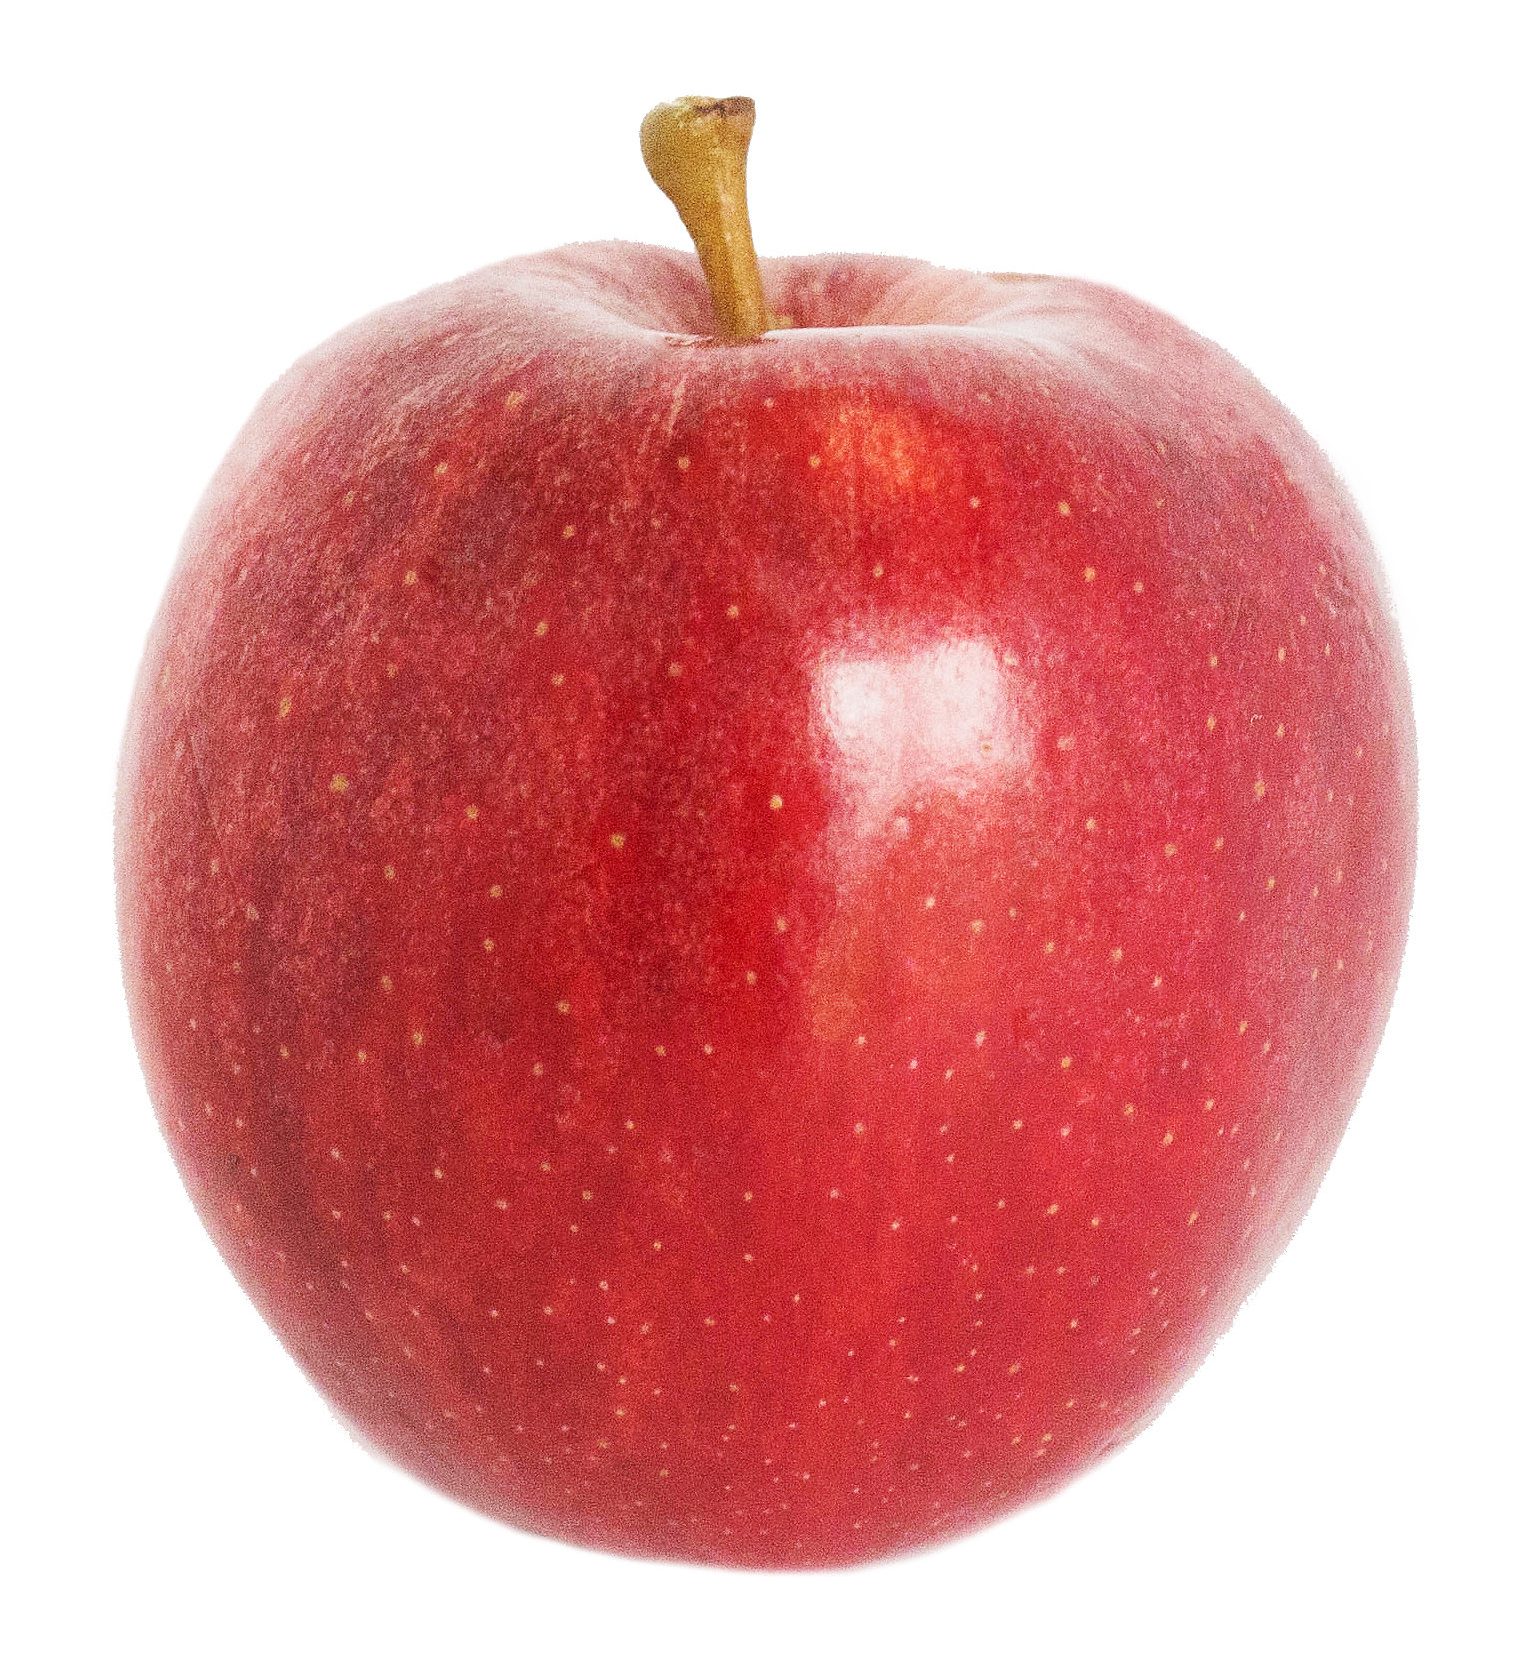 McIntosh Apples - Riveridge Produce Marketing, INC.